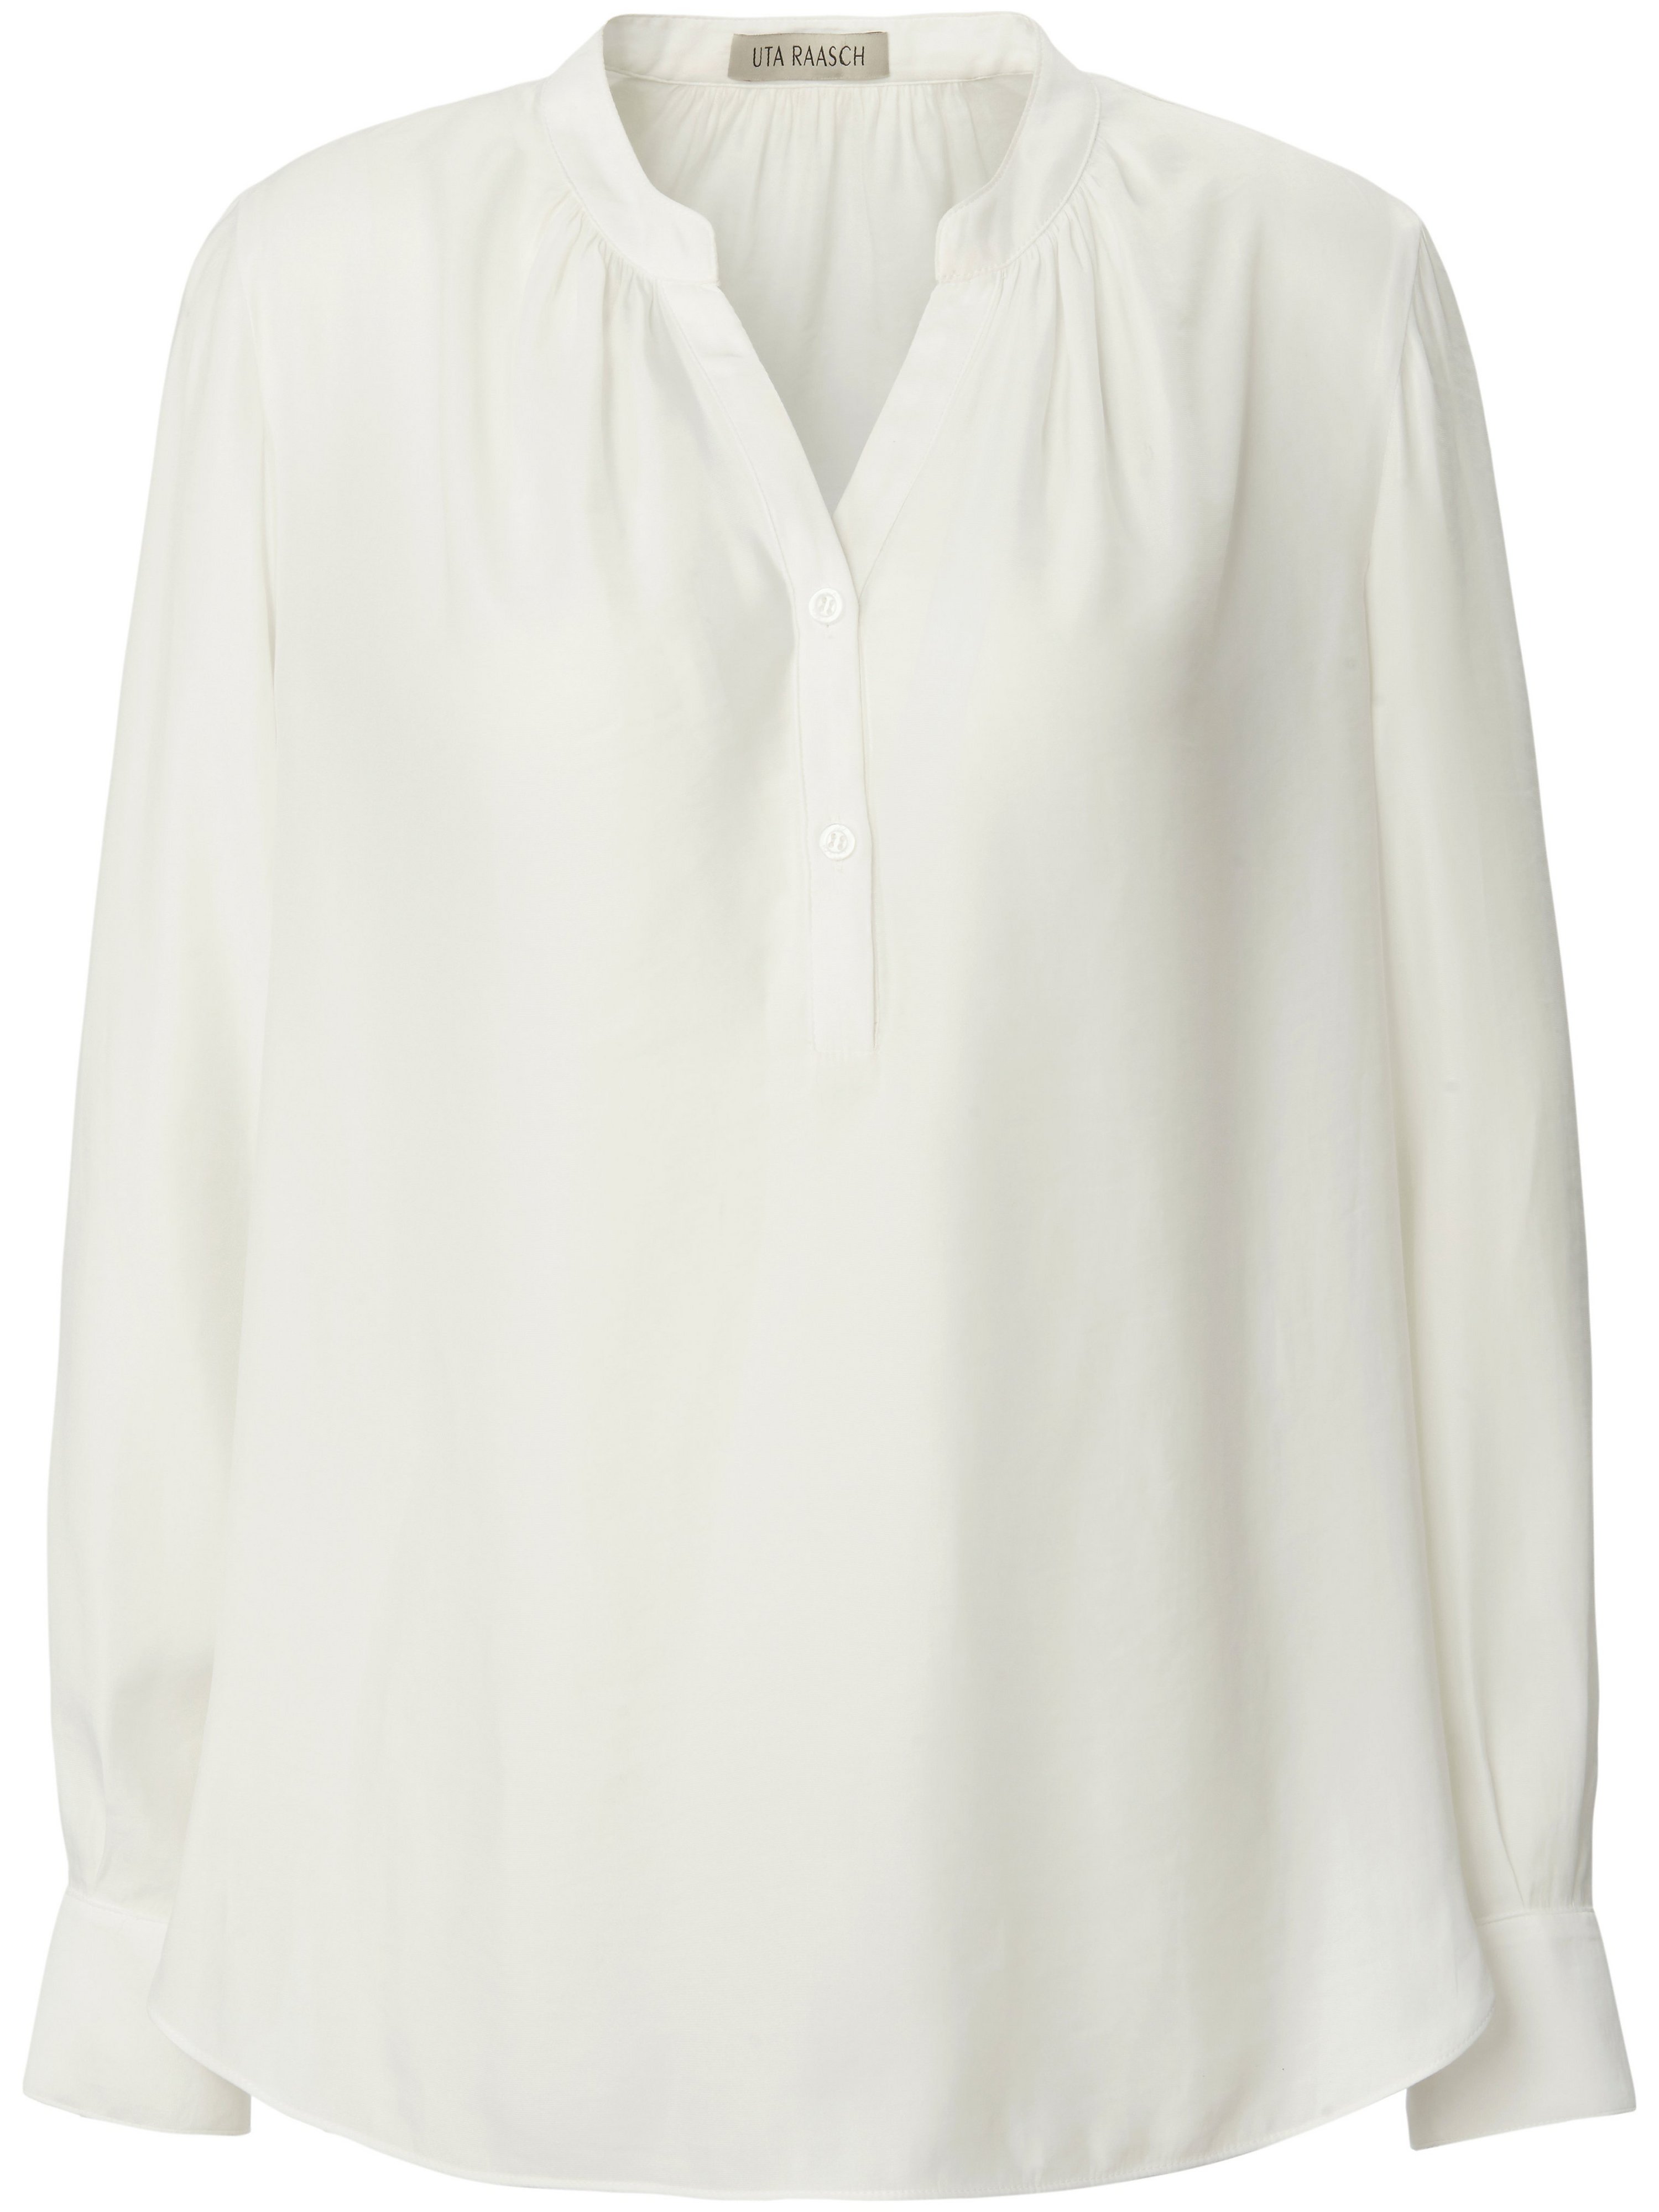 La blouse manches longues  Uta Raasch blanc taille 50